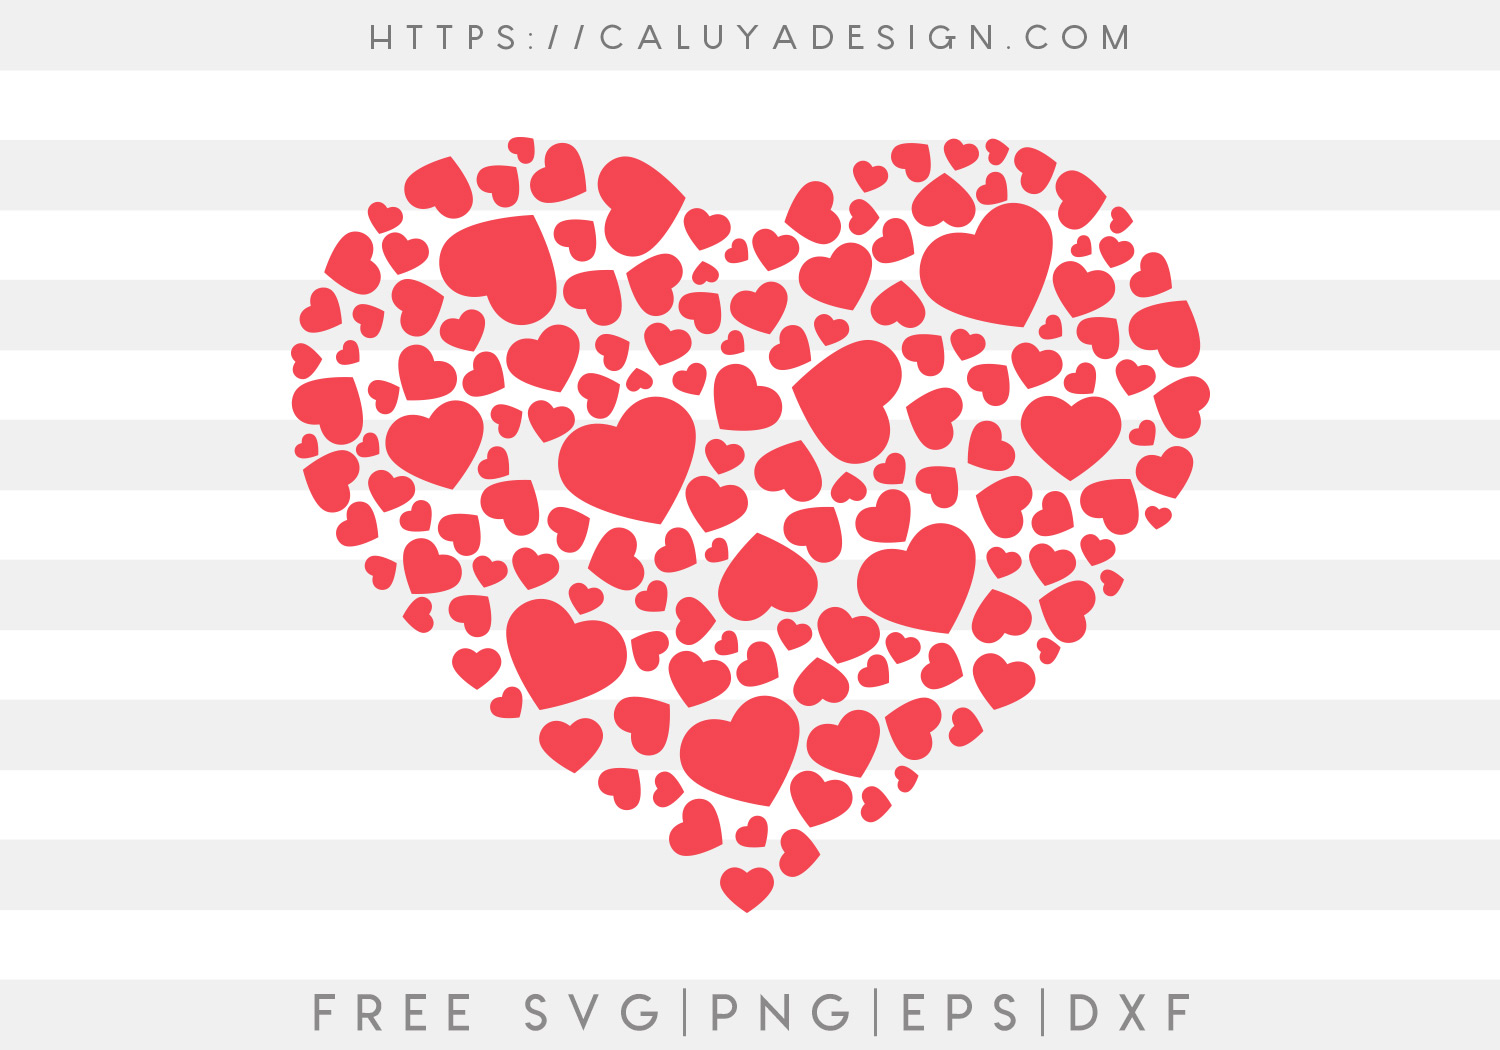 Heart SVG Free Sharing 10+ Free Heart SVG Files